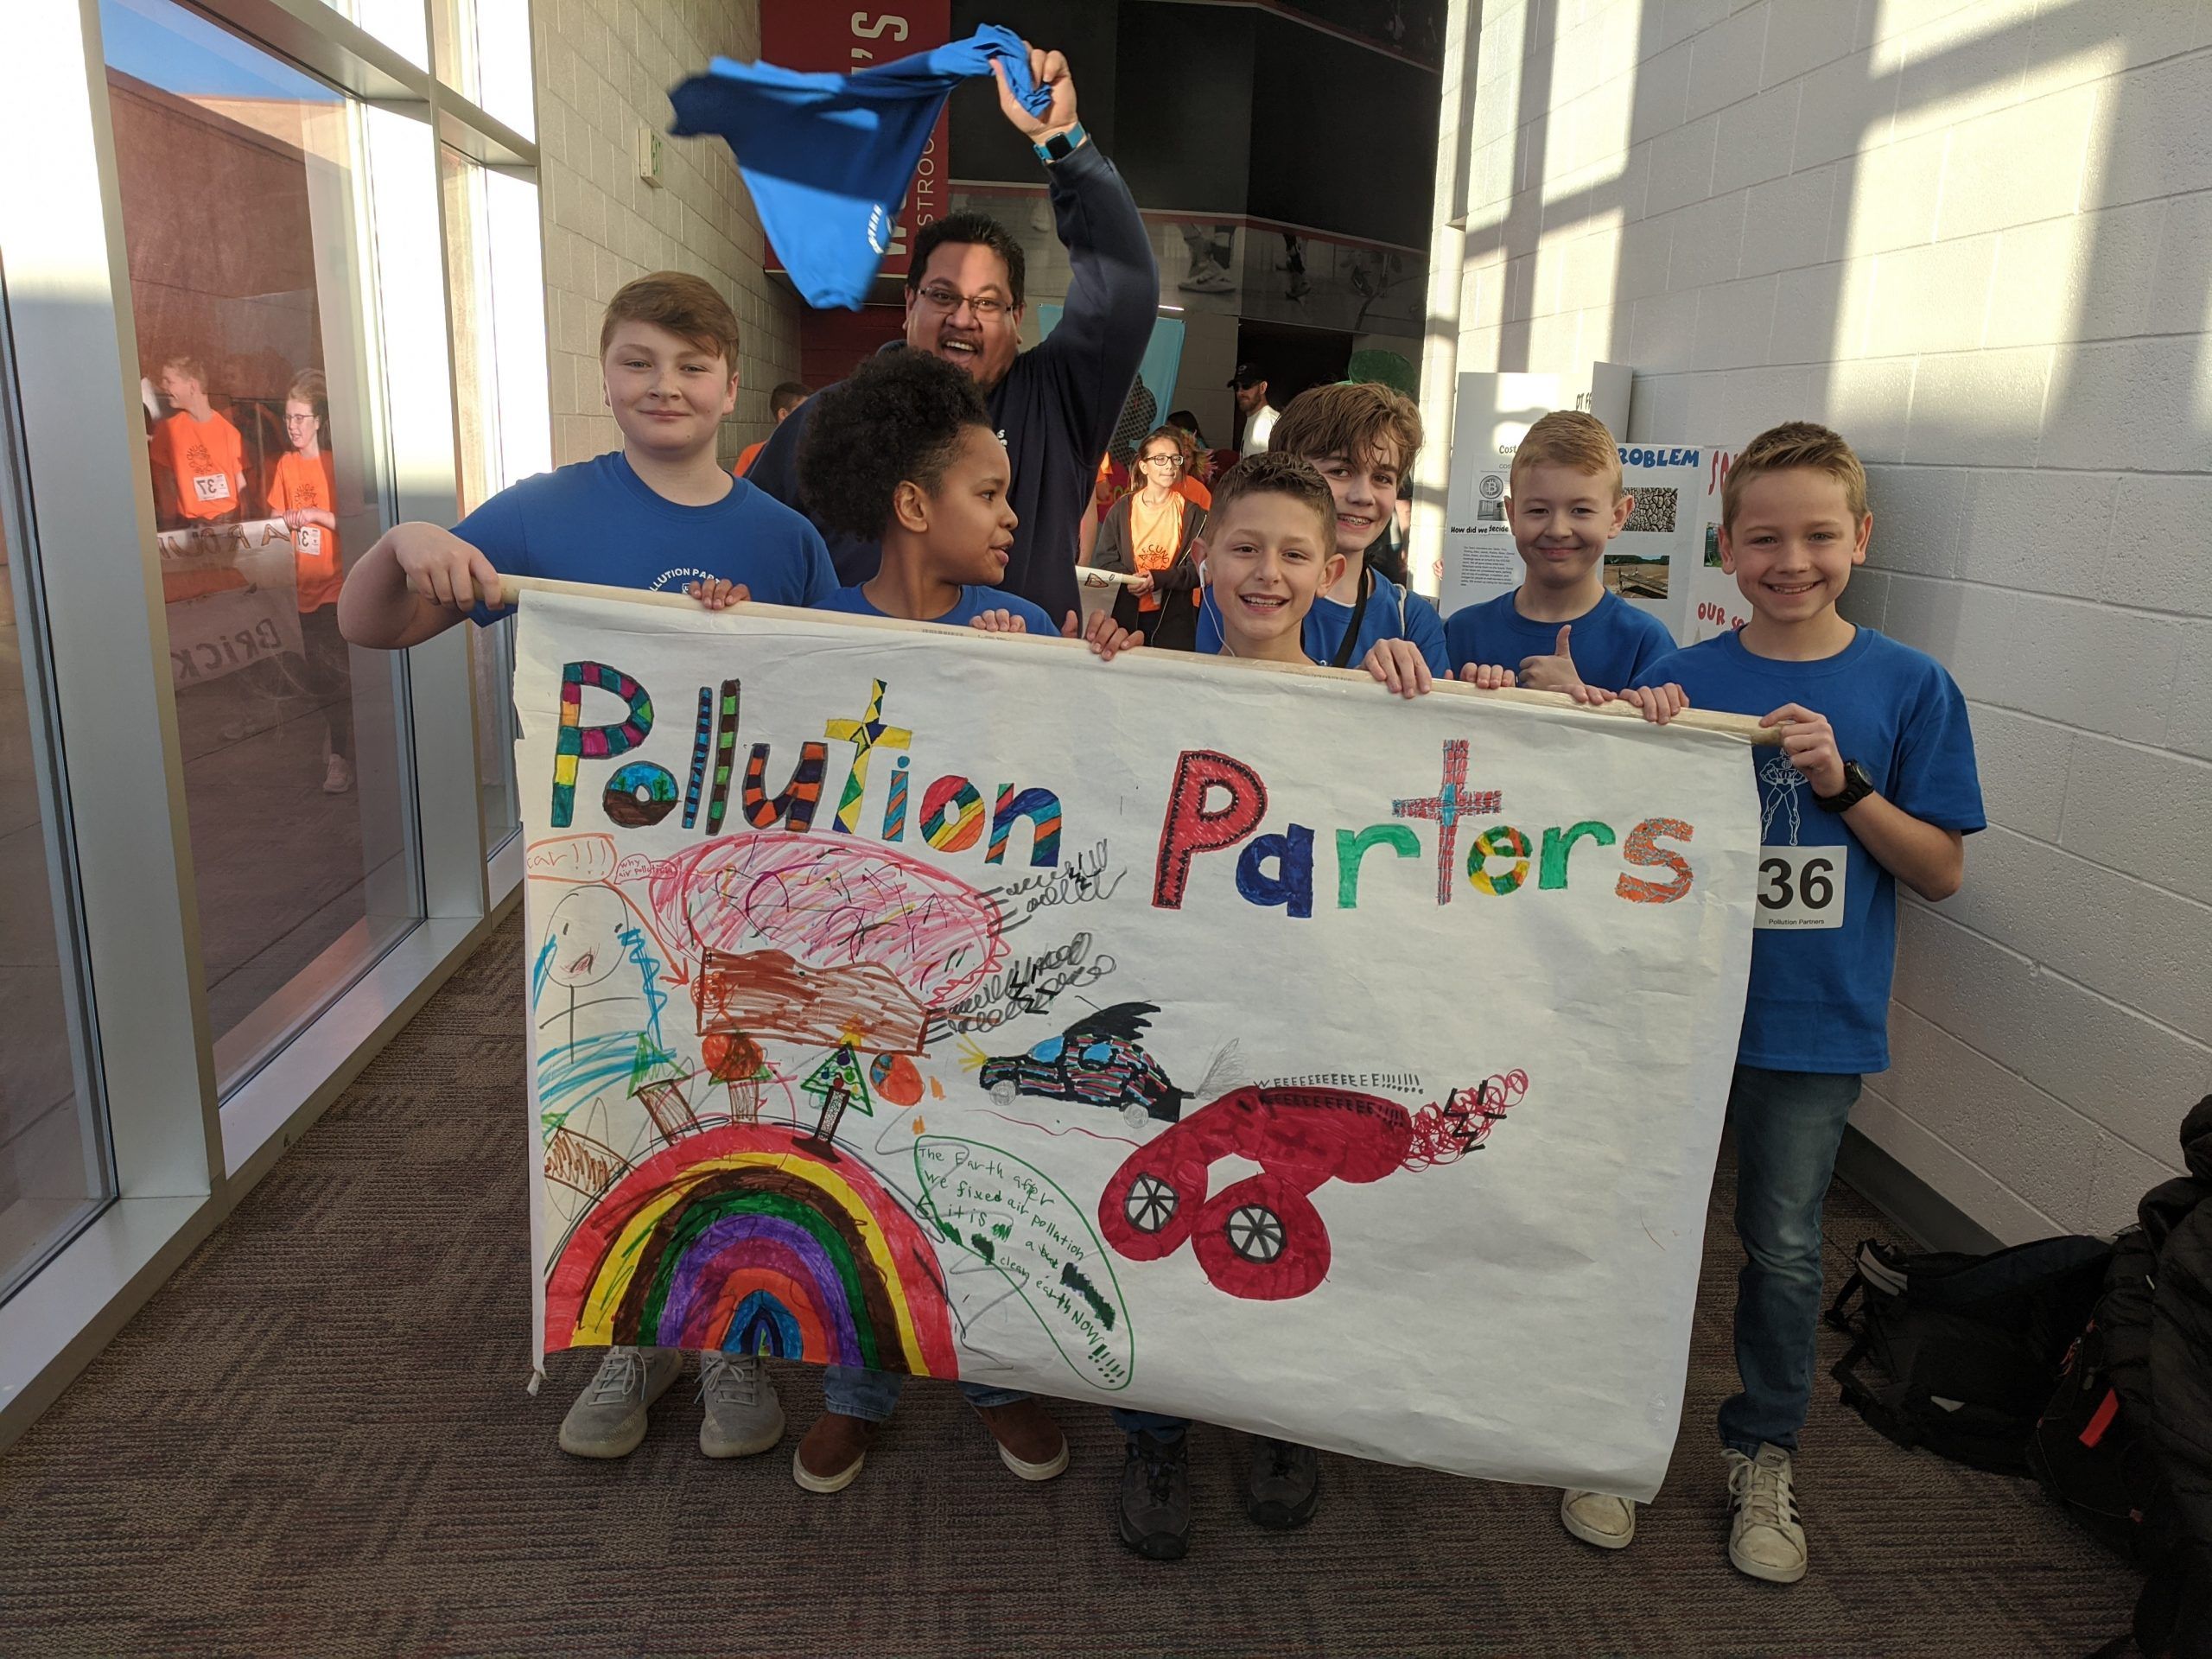 Pollution Partners Team photo